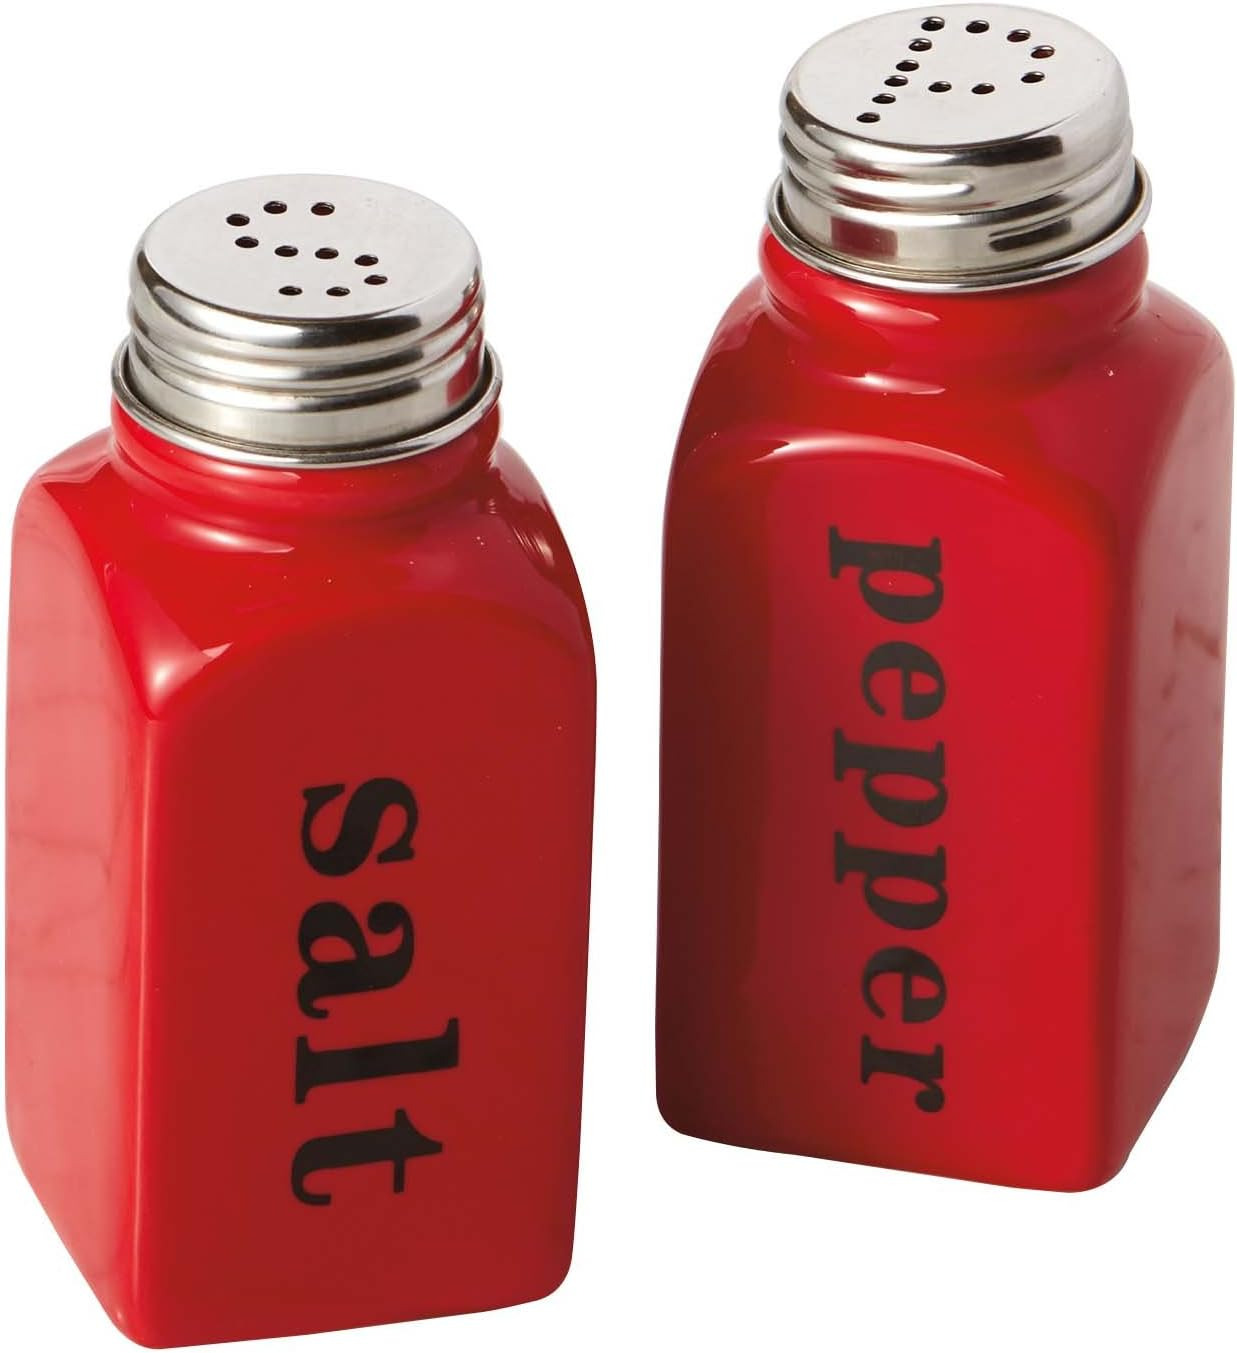 Ceramic Salt & Pepper Shakers (Red)